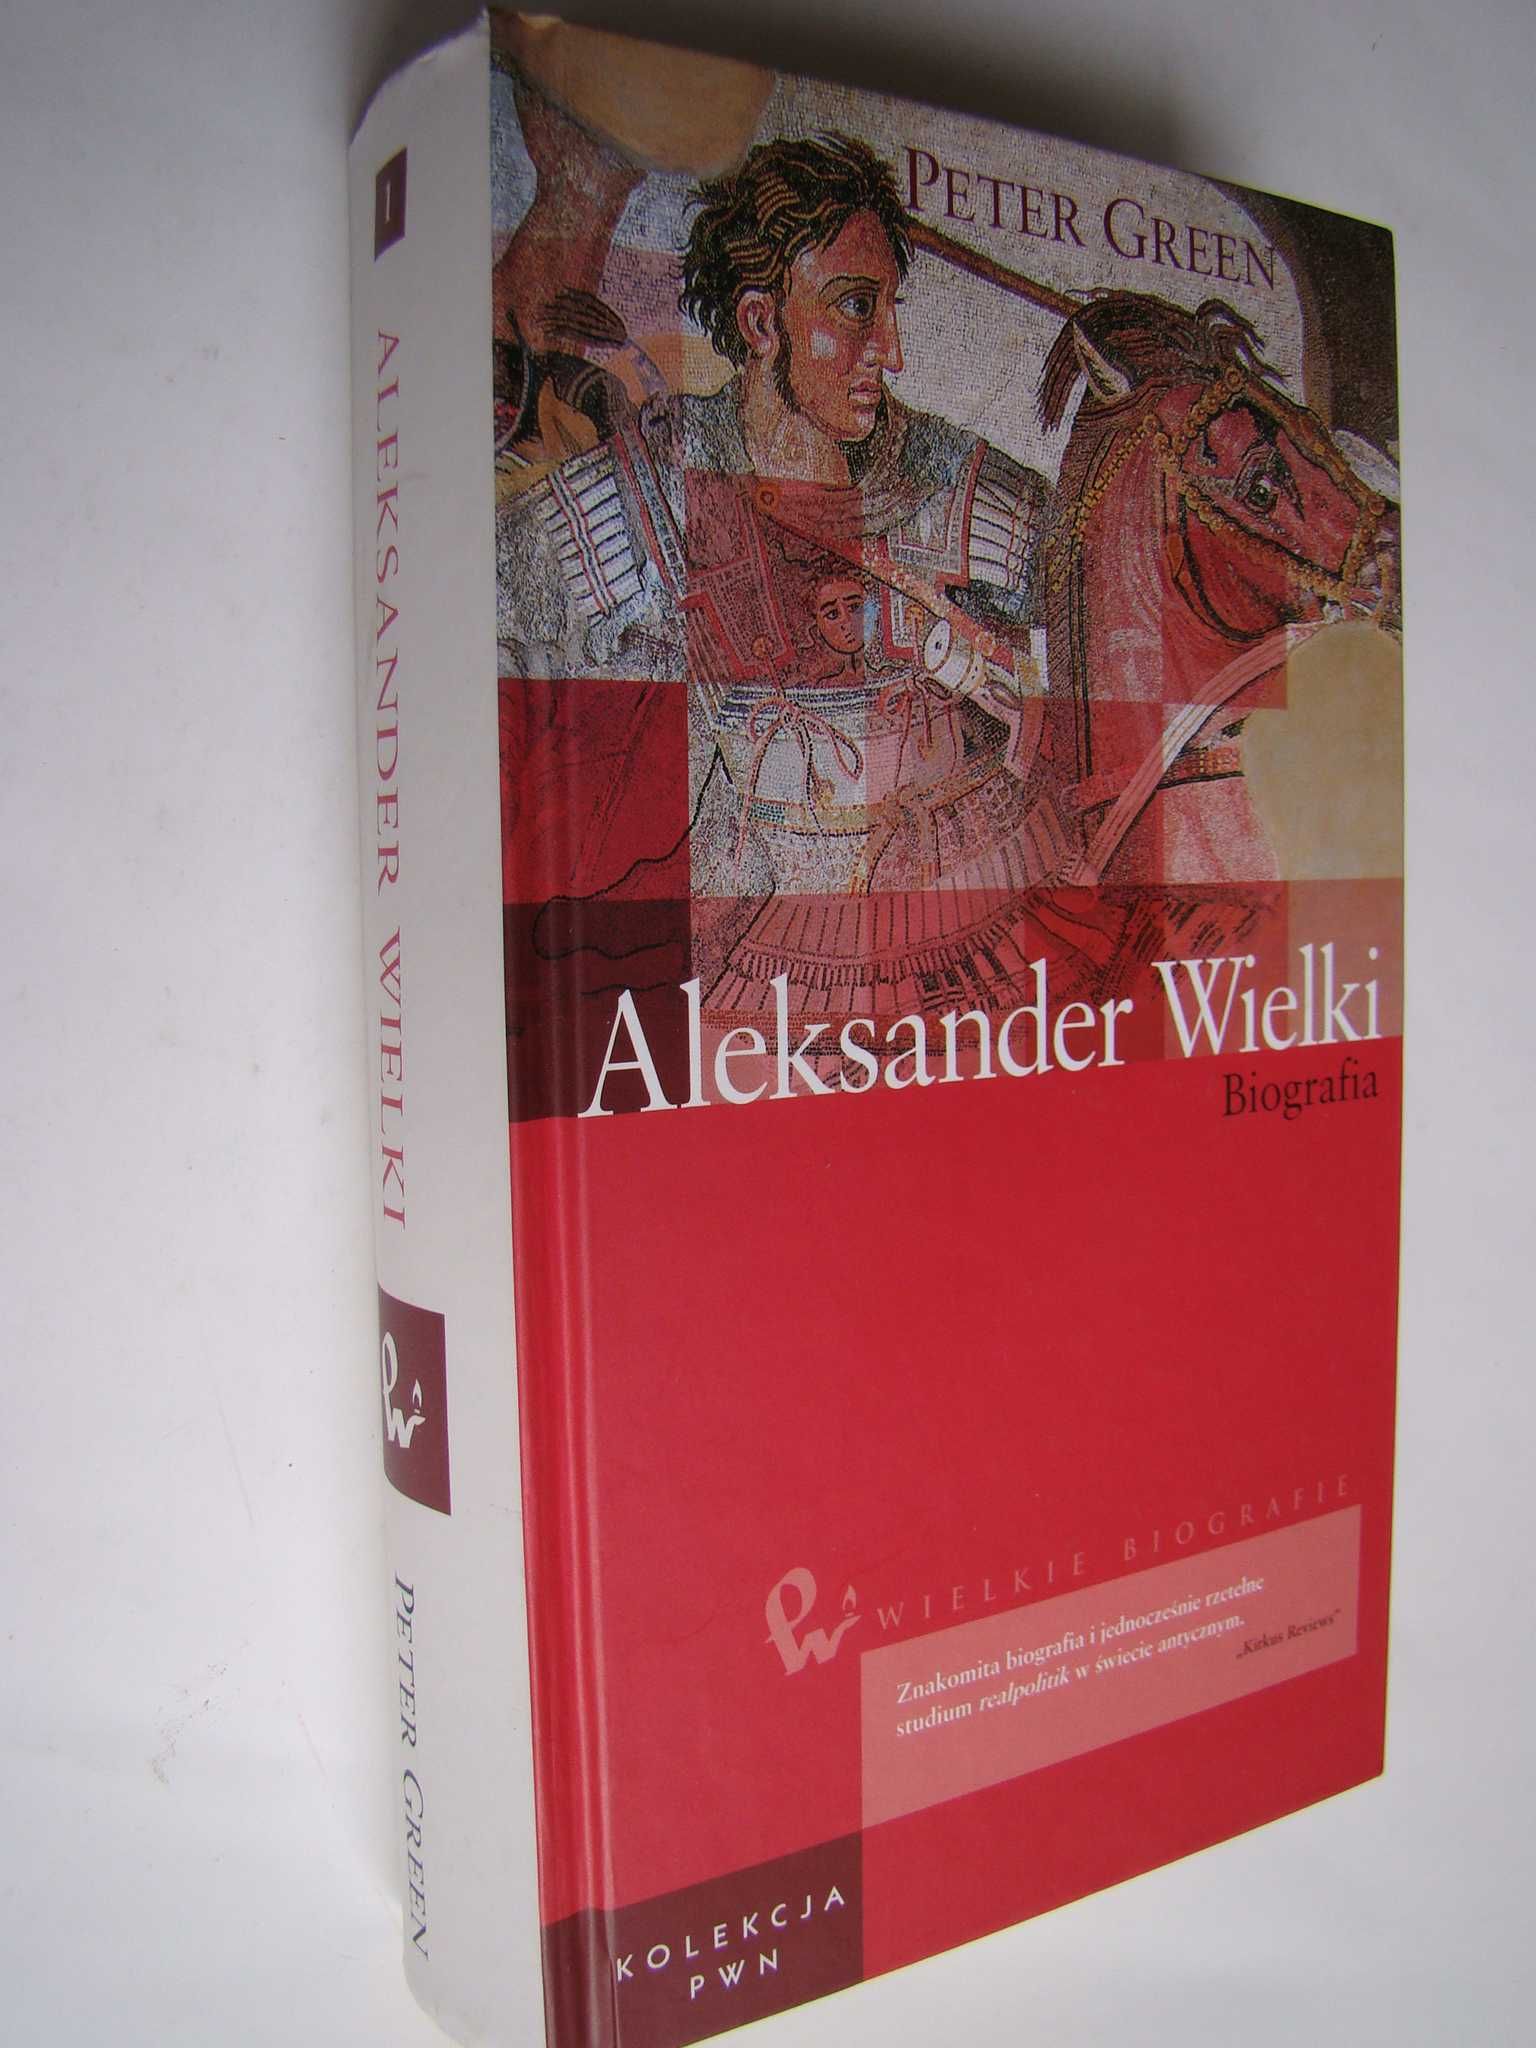 Aleksander Wielki - Biografia. Peter Green